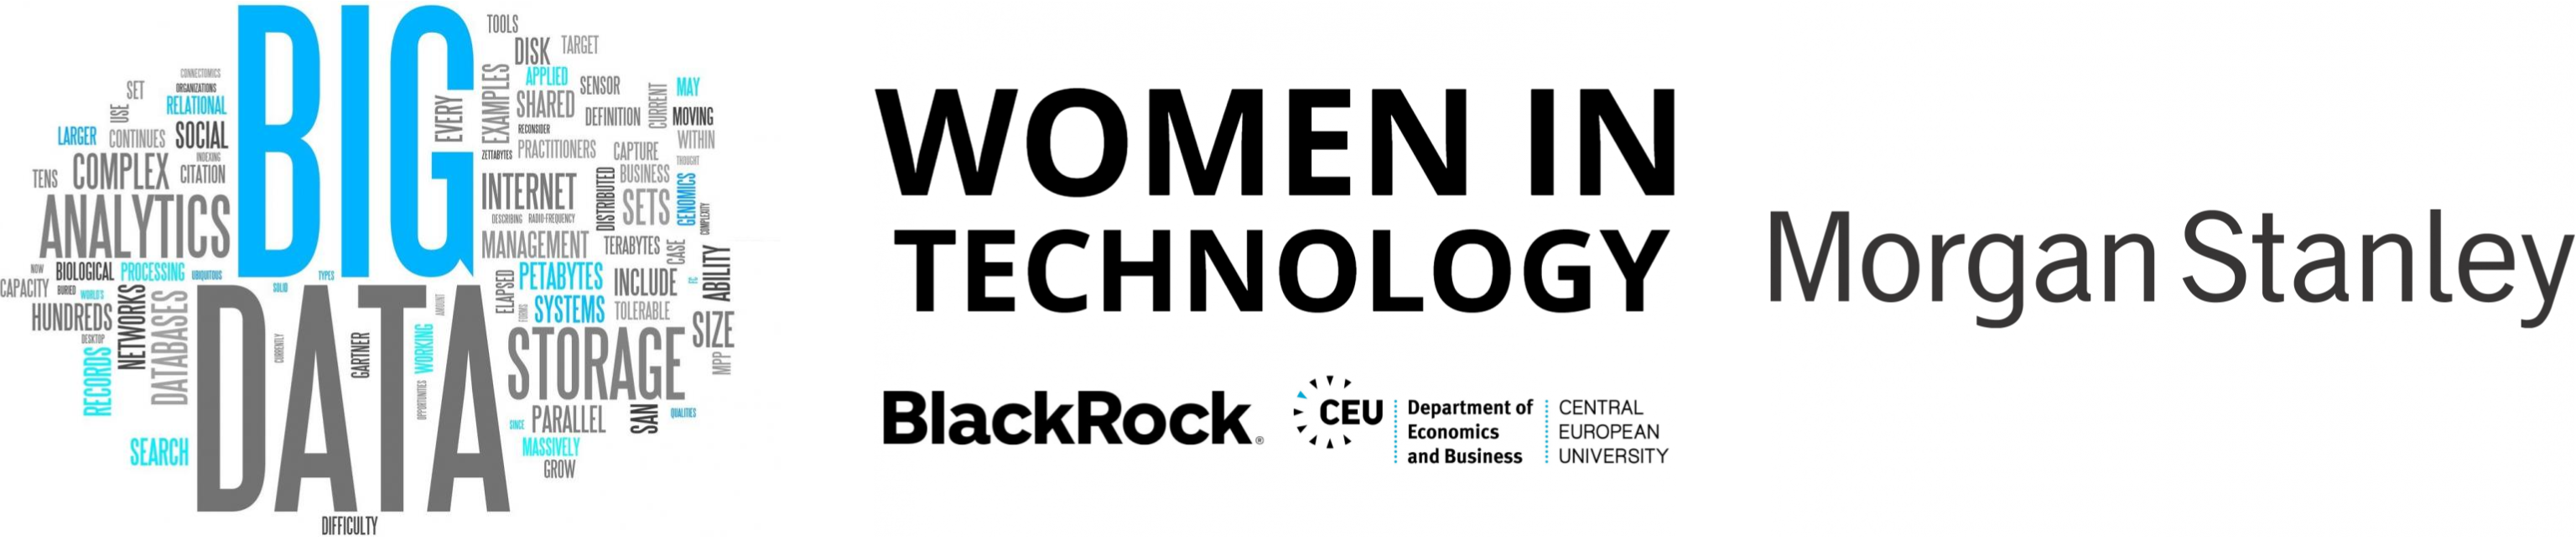 CEU Business Master's Scholarships Internships Future of Big Data London investment firm Women in Technology BlackRock Morgan Stanley